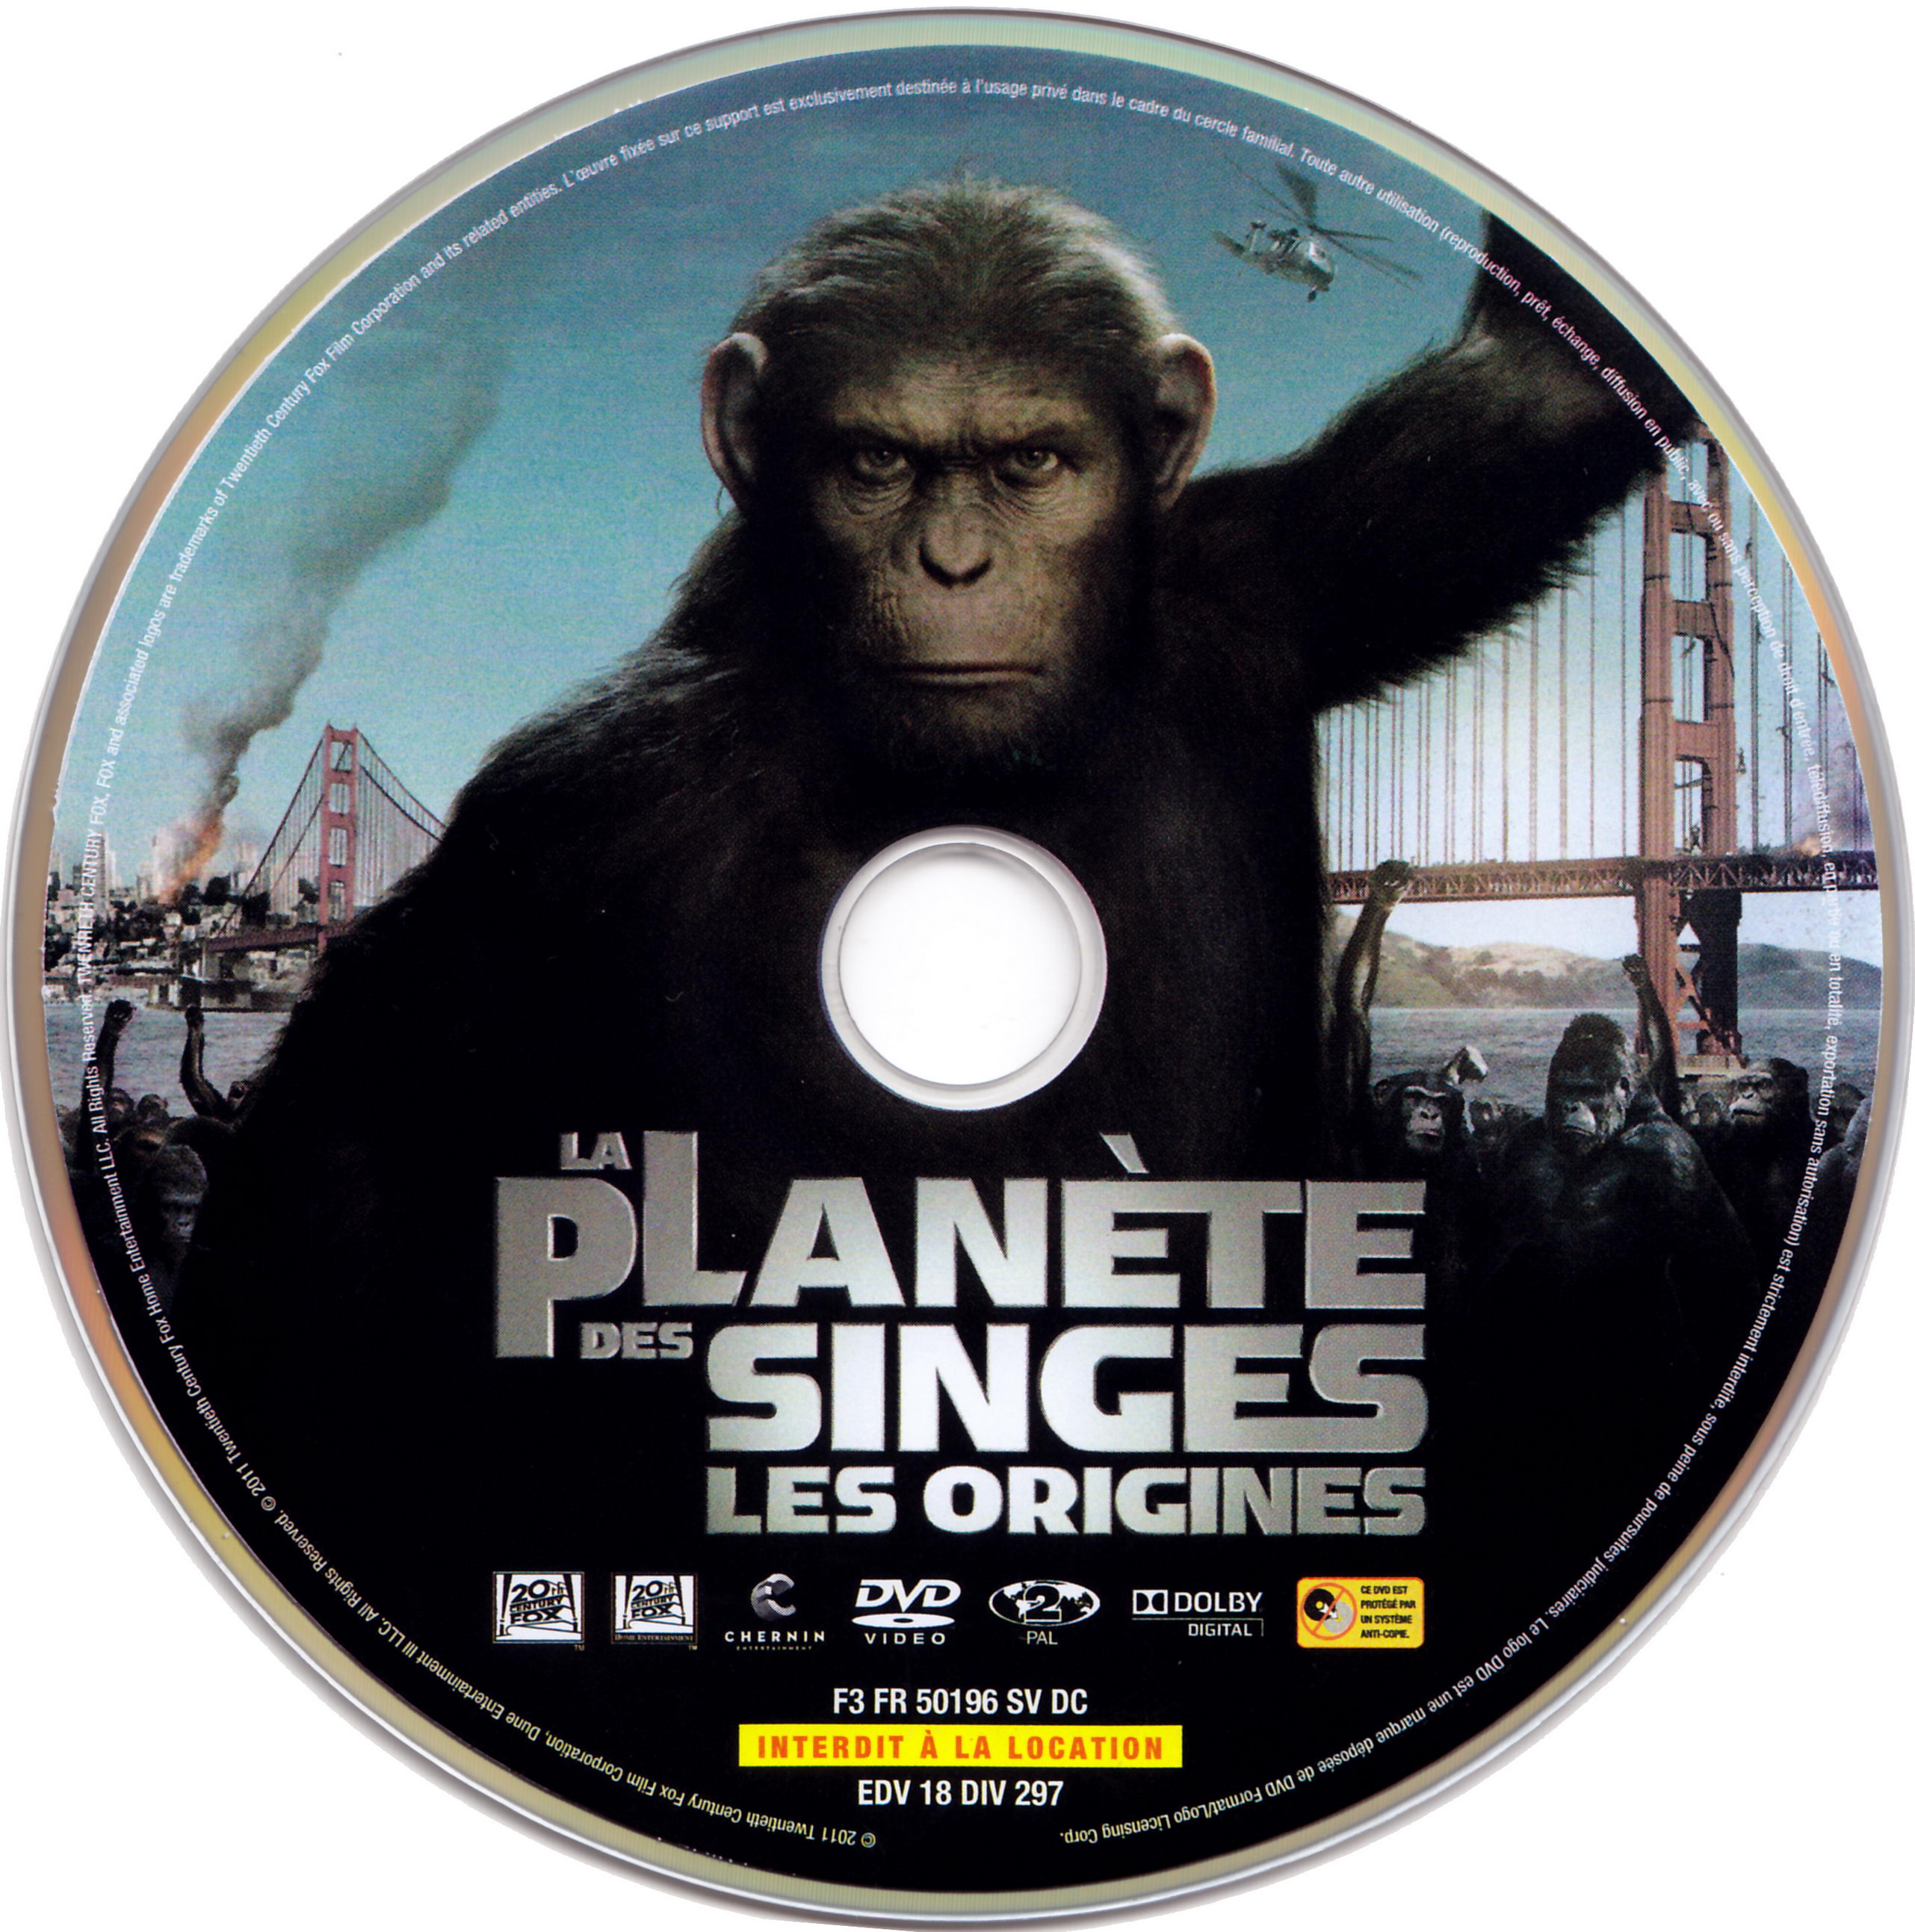 La Plante des singes : les origines (Film)